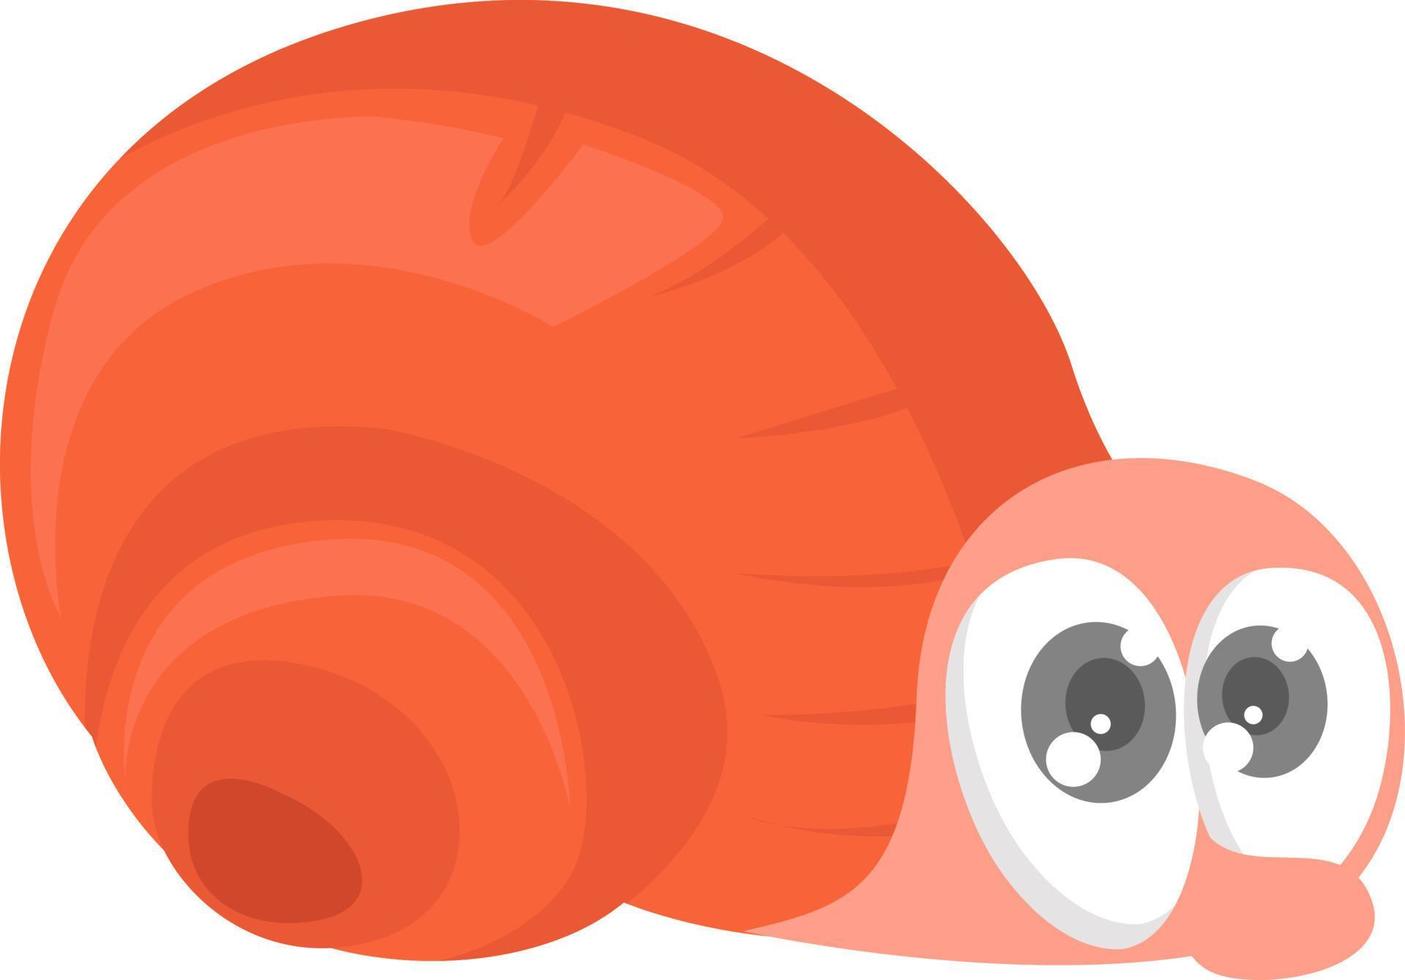 Coward snail, illustration, vector on white background.